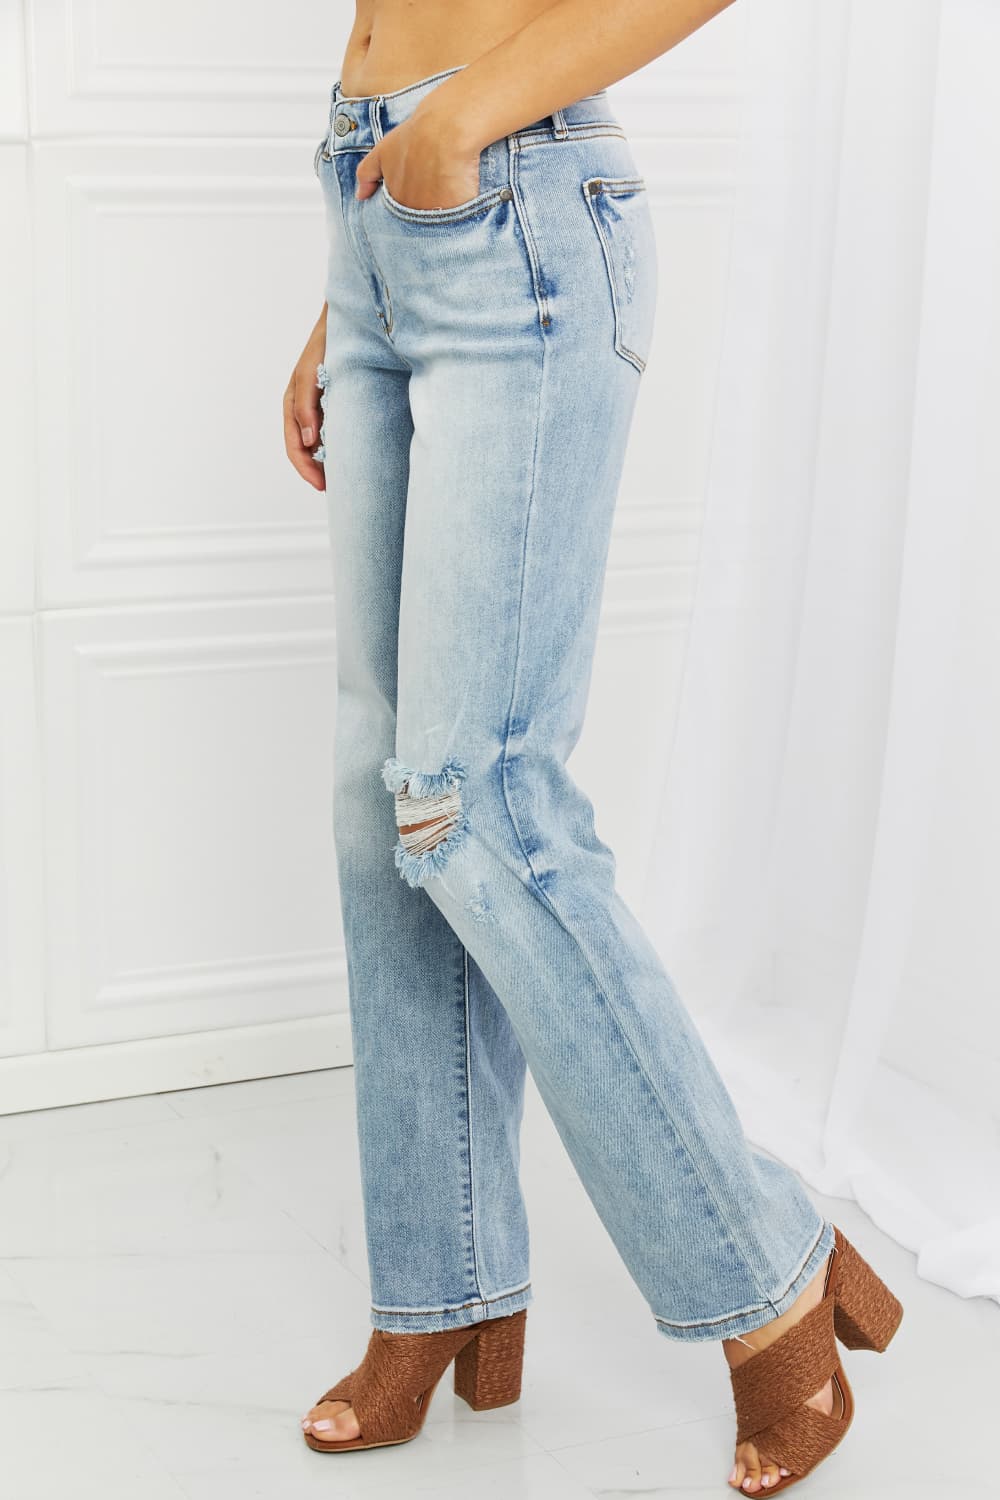 Judy Blue Natalie Full Size Distressed Straight Leg Jeans - The Fashion Unicorn